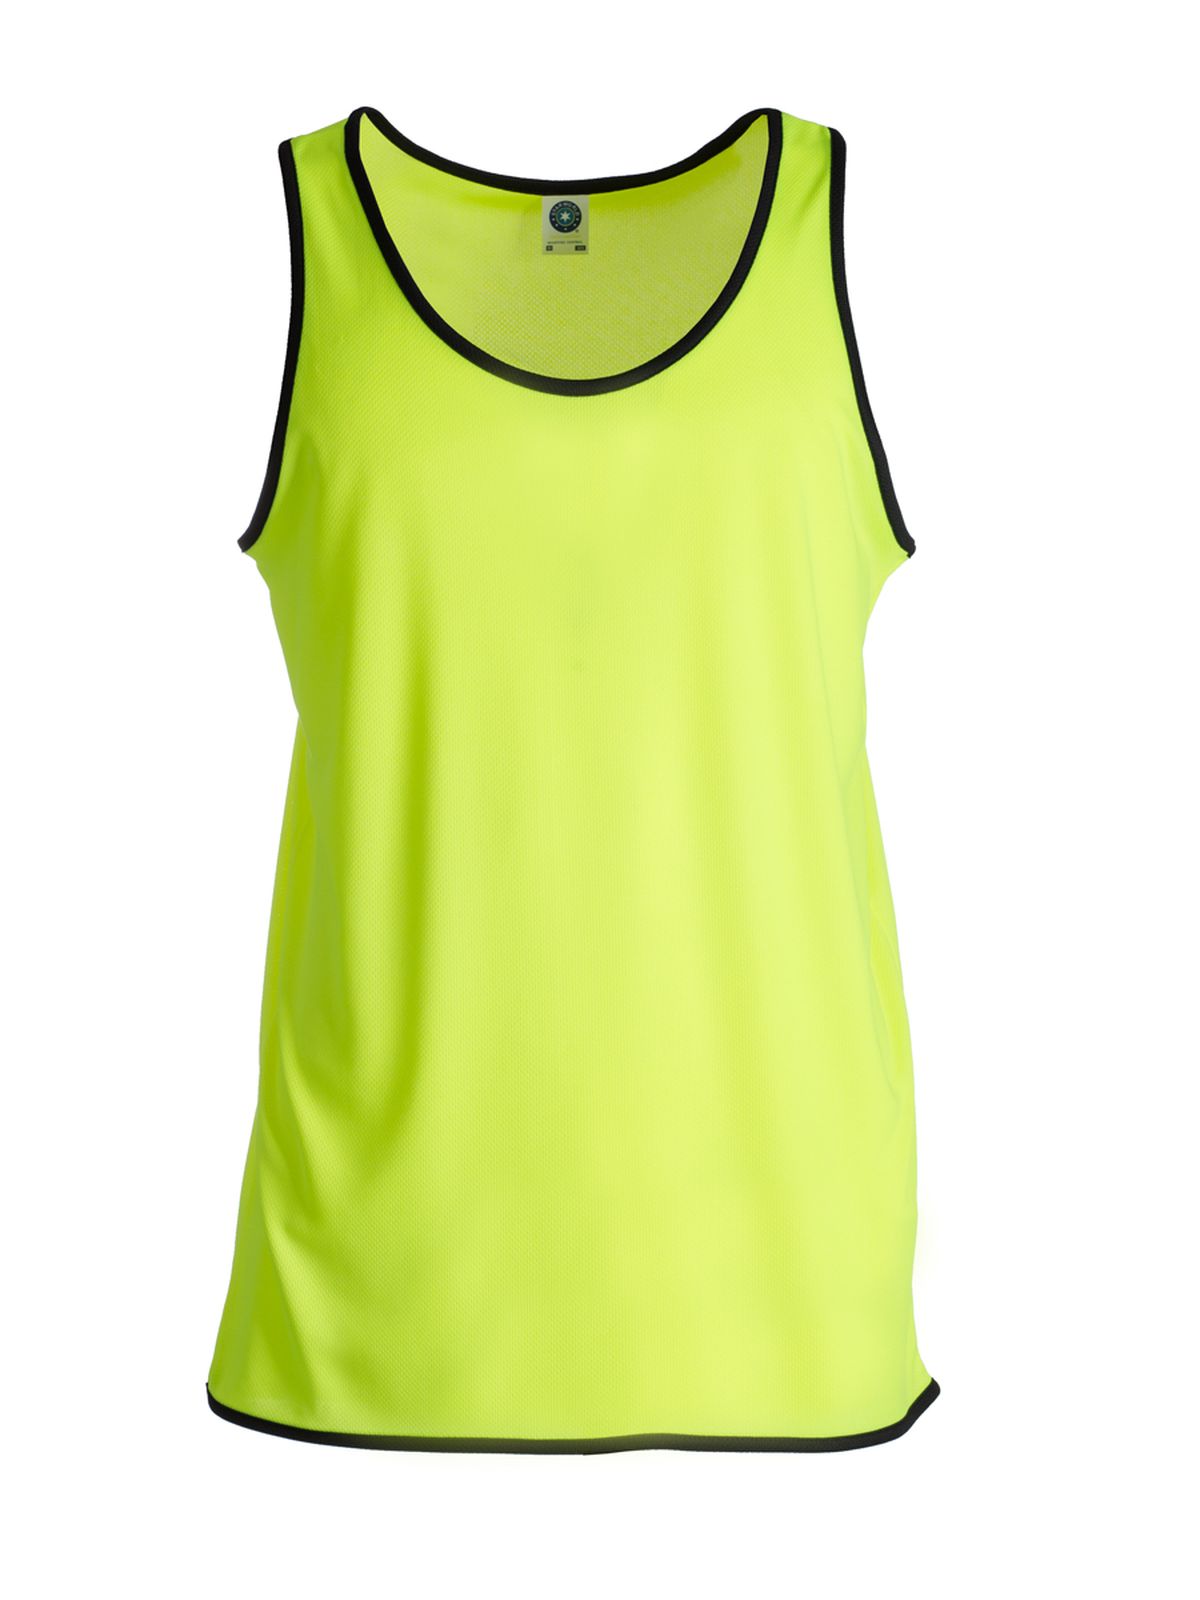 ultra-tech-contrast-running-and-sports-vest-fluorescent-yellow-black.webp